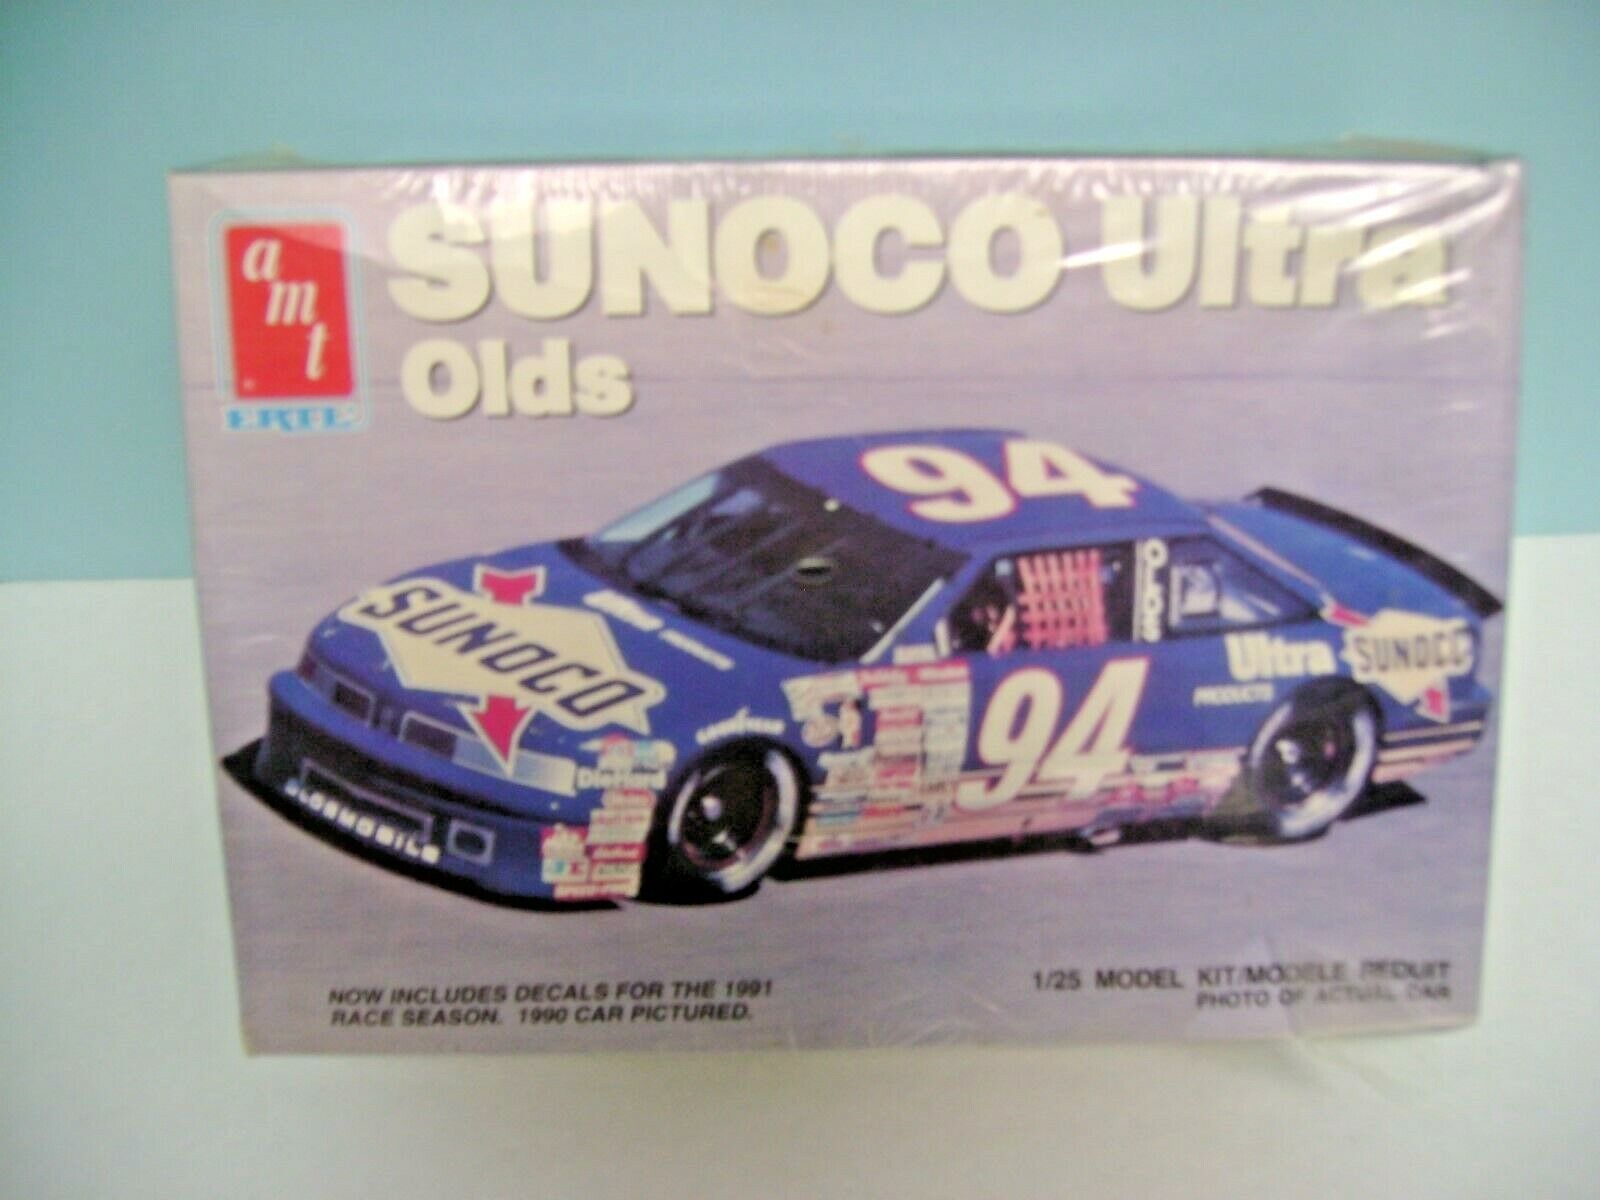 Vintage AMT ERTL Sunoco Ultra Olds 1990 Car 1991 Season Stickers 1//25 Model Kit for sale online